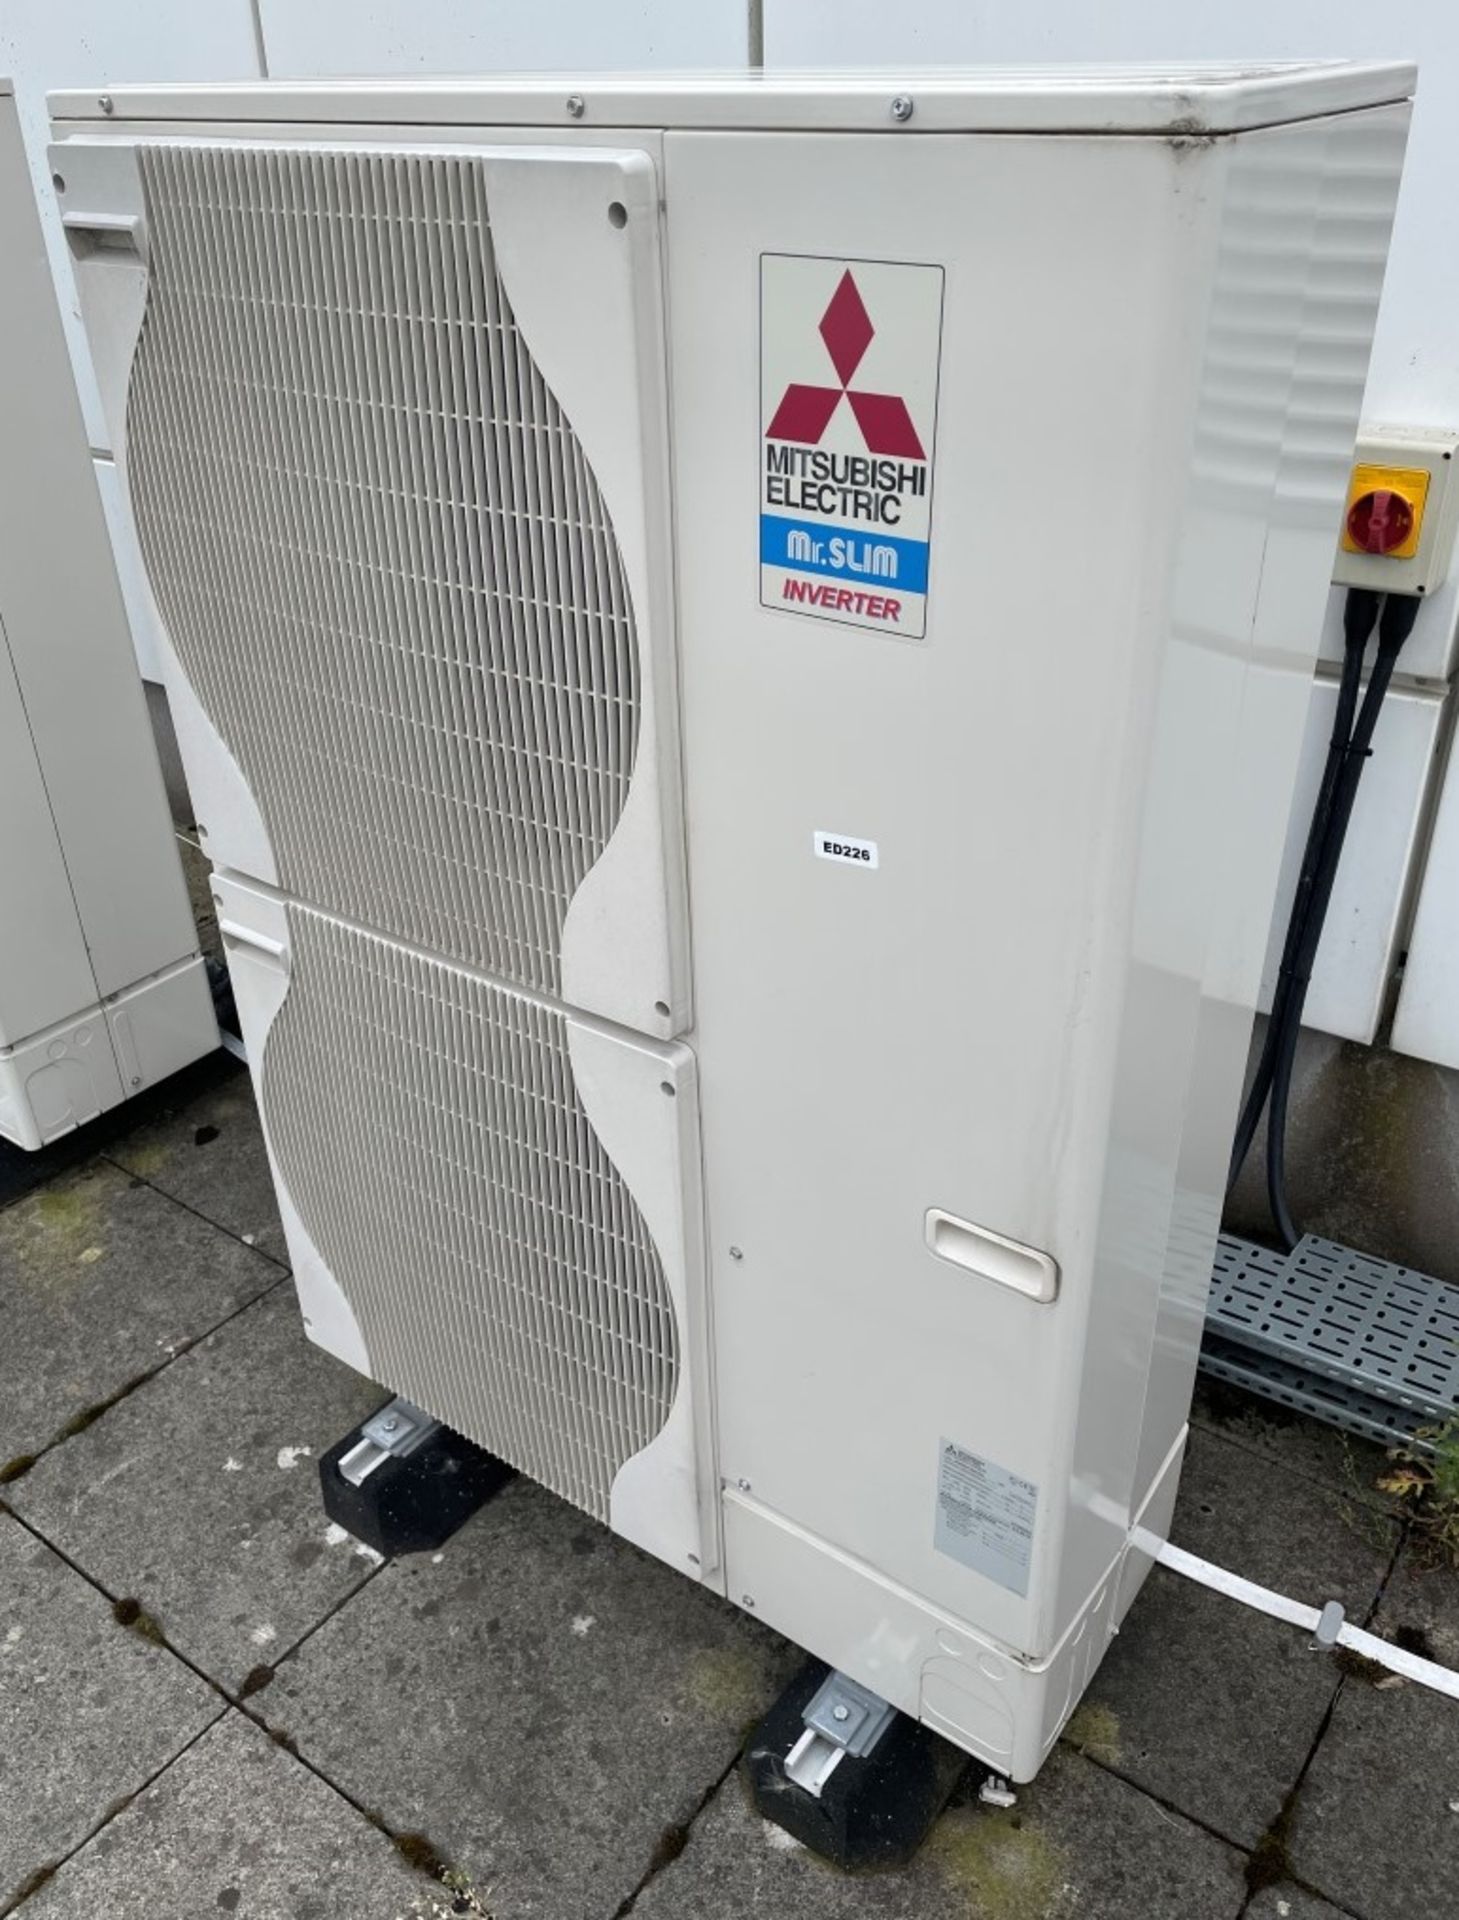 1 x MITSUBISH Air Conditioner Split Type Outdoor Unit (Model: puhz-p125yha) - Ref: ED226 - To Be